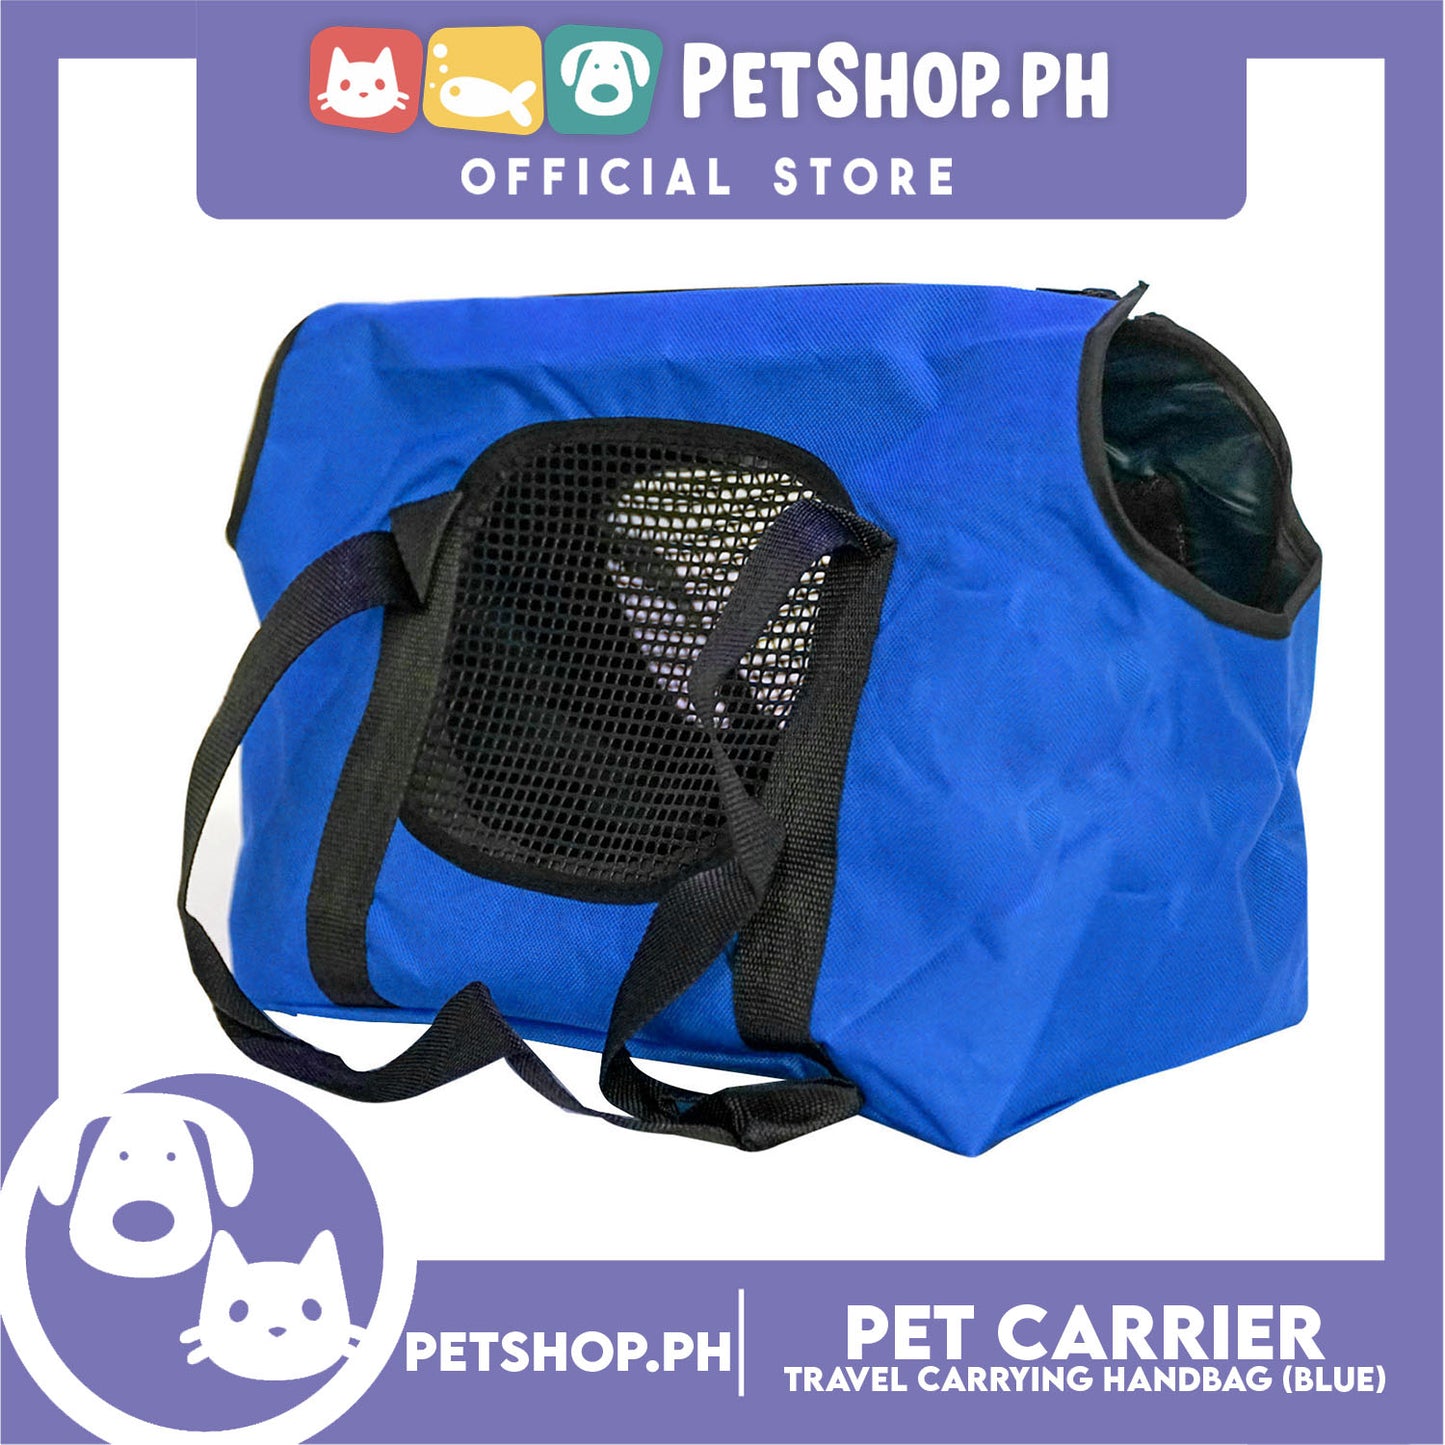 Pet Carrier Summer Travel Carrying Handbag, Shoulder Bag L34 x W13 x H22 Small (Blue)